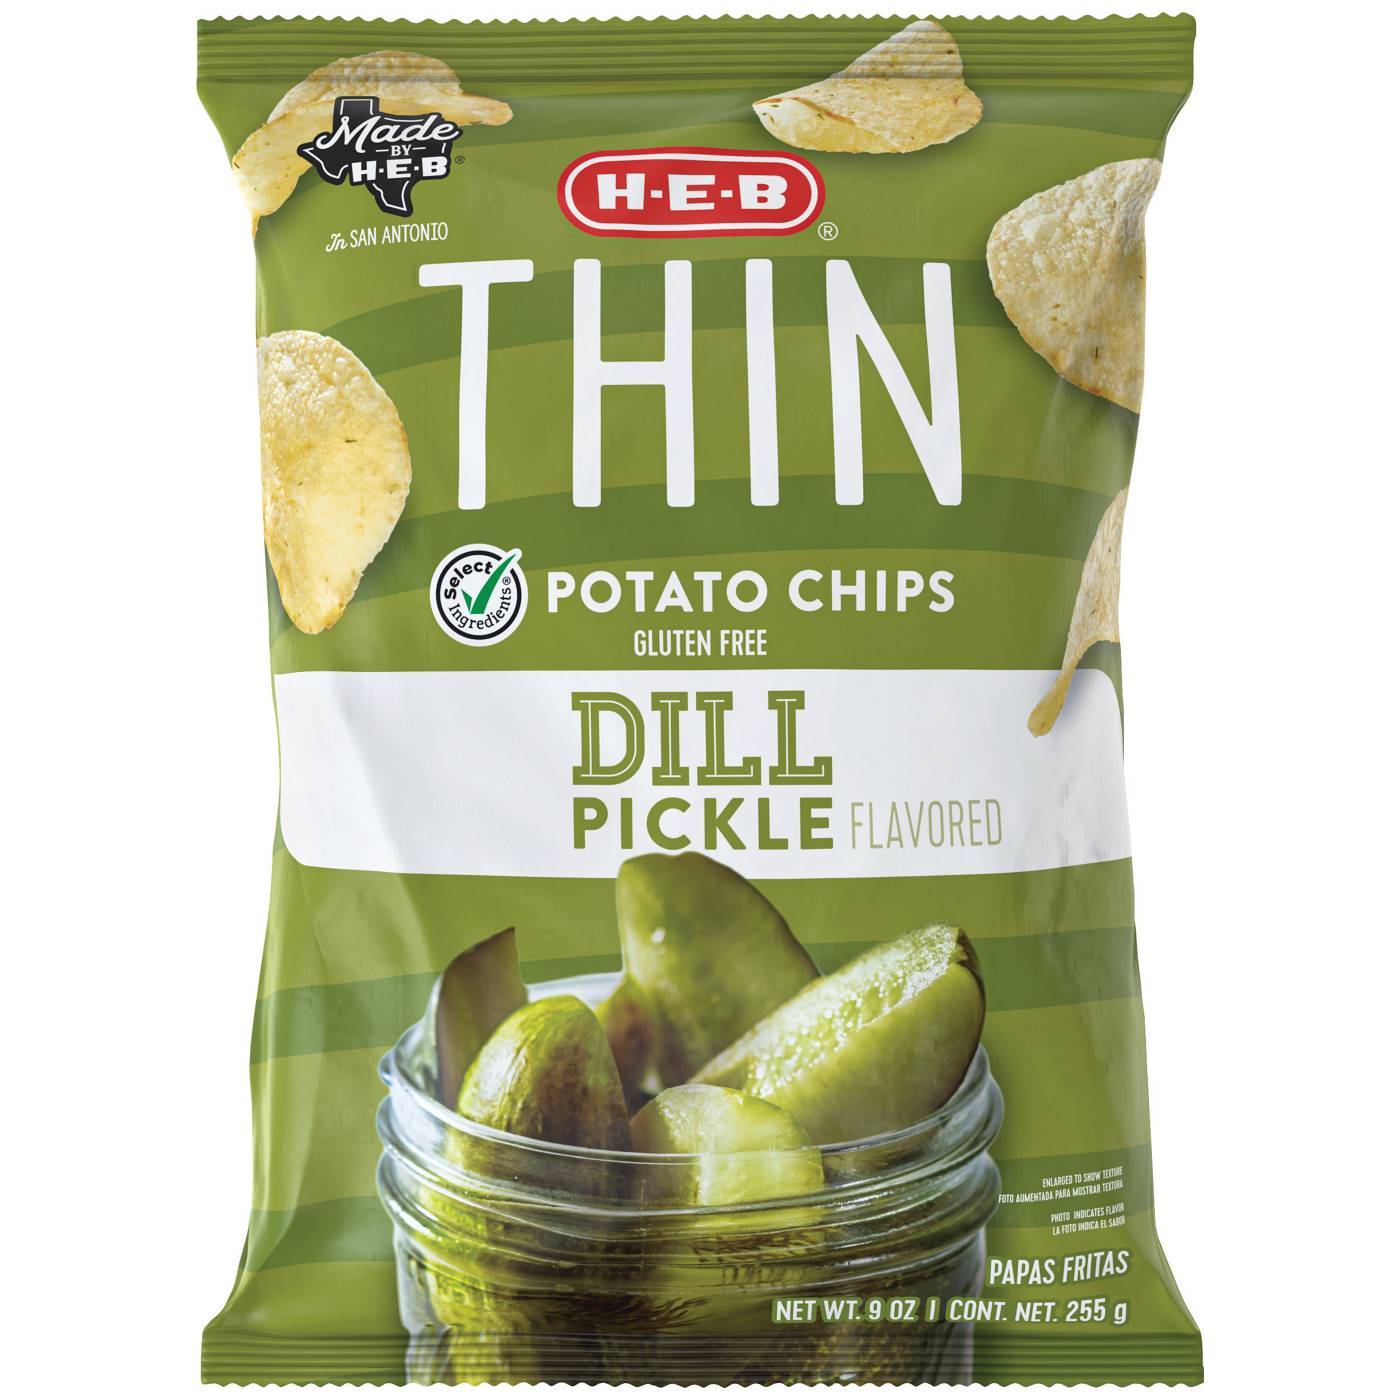 H-E-B Thin Potato Chips - Dill Pickle; image 1 of 3